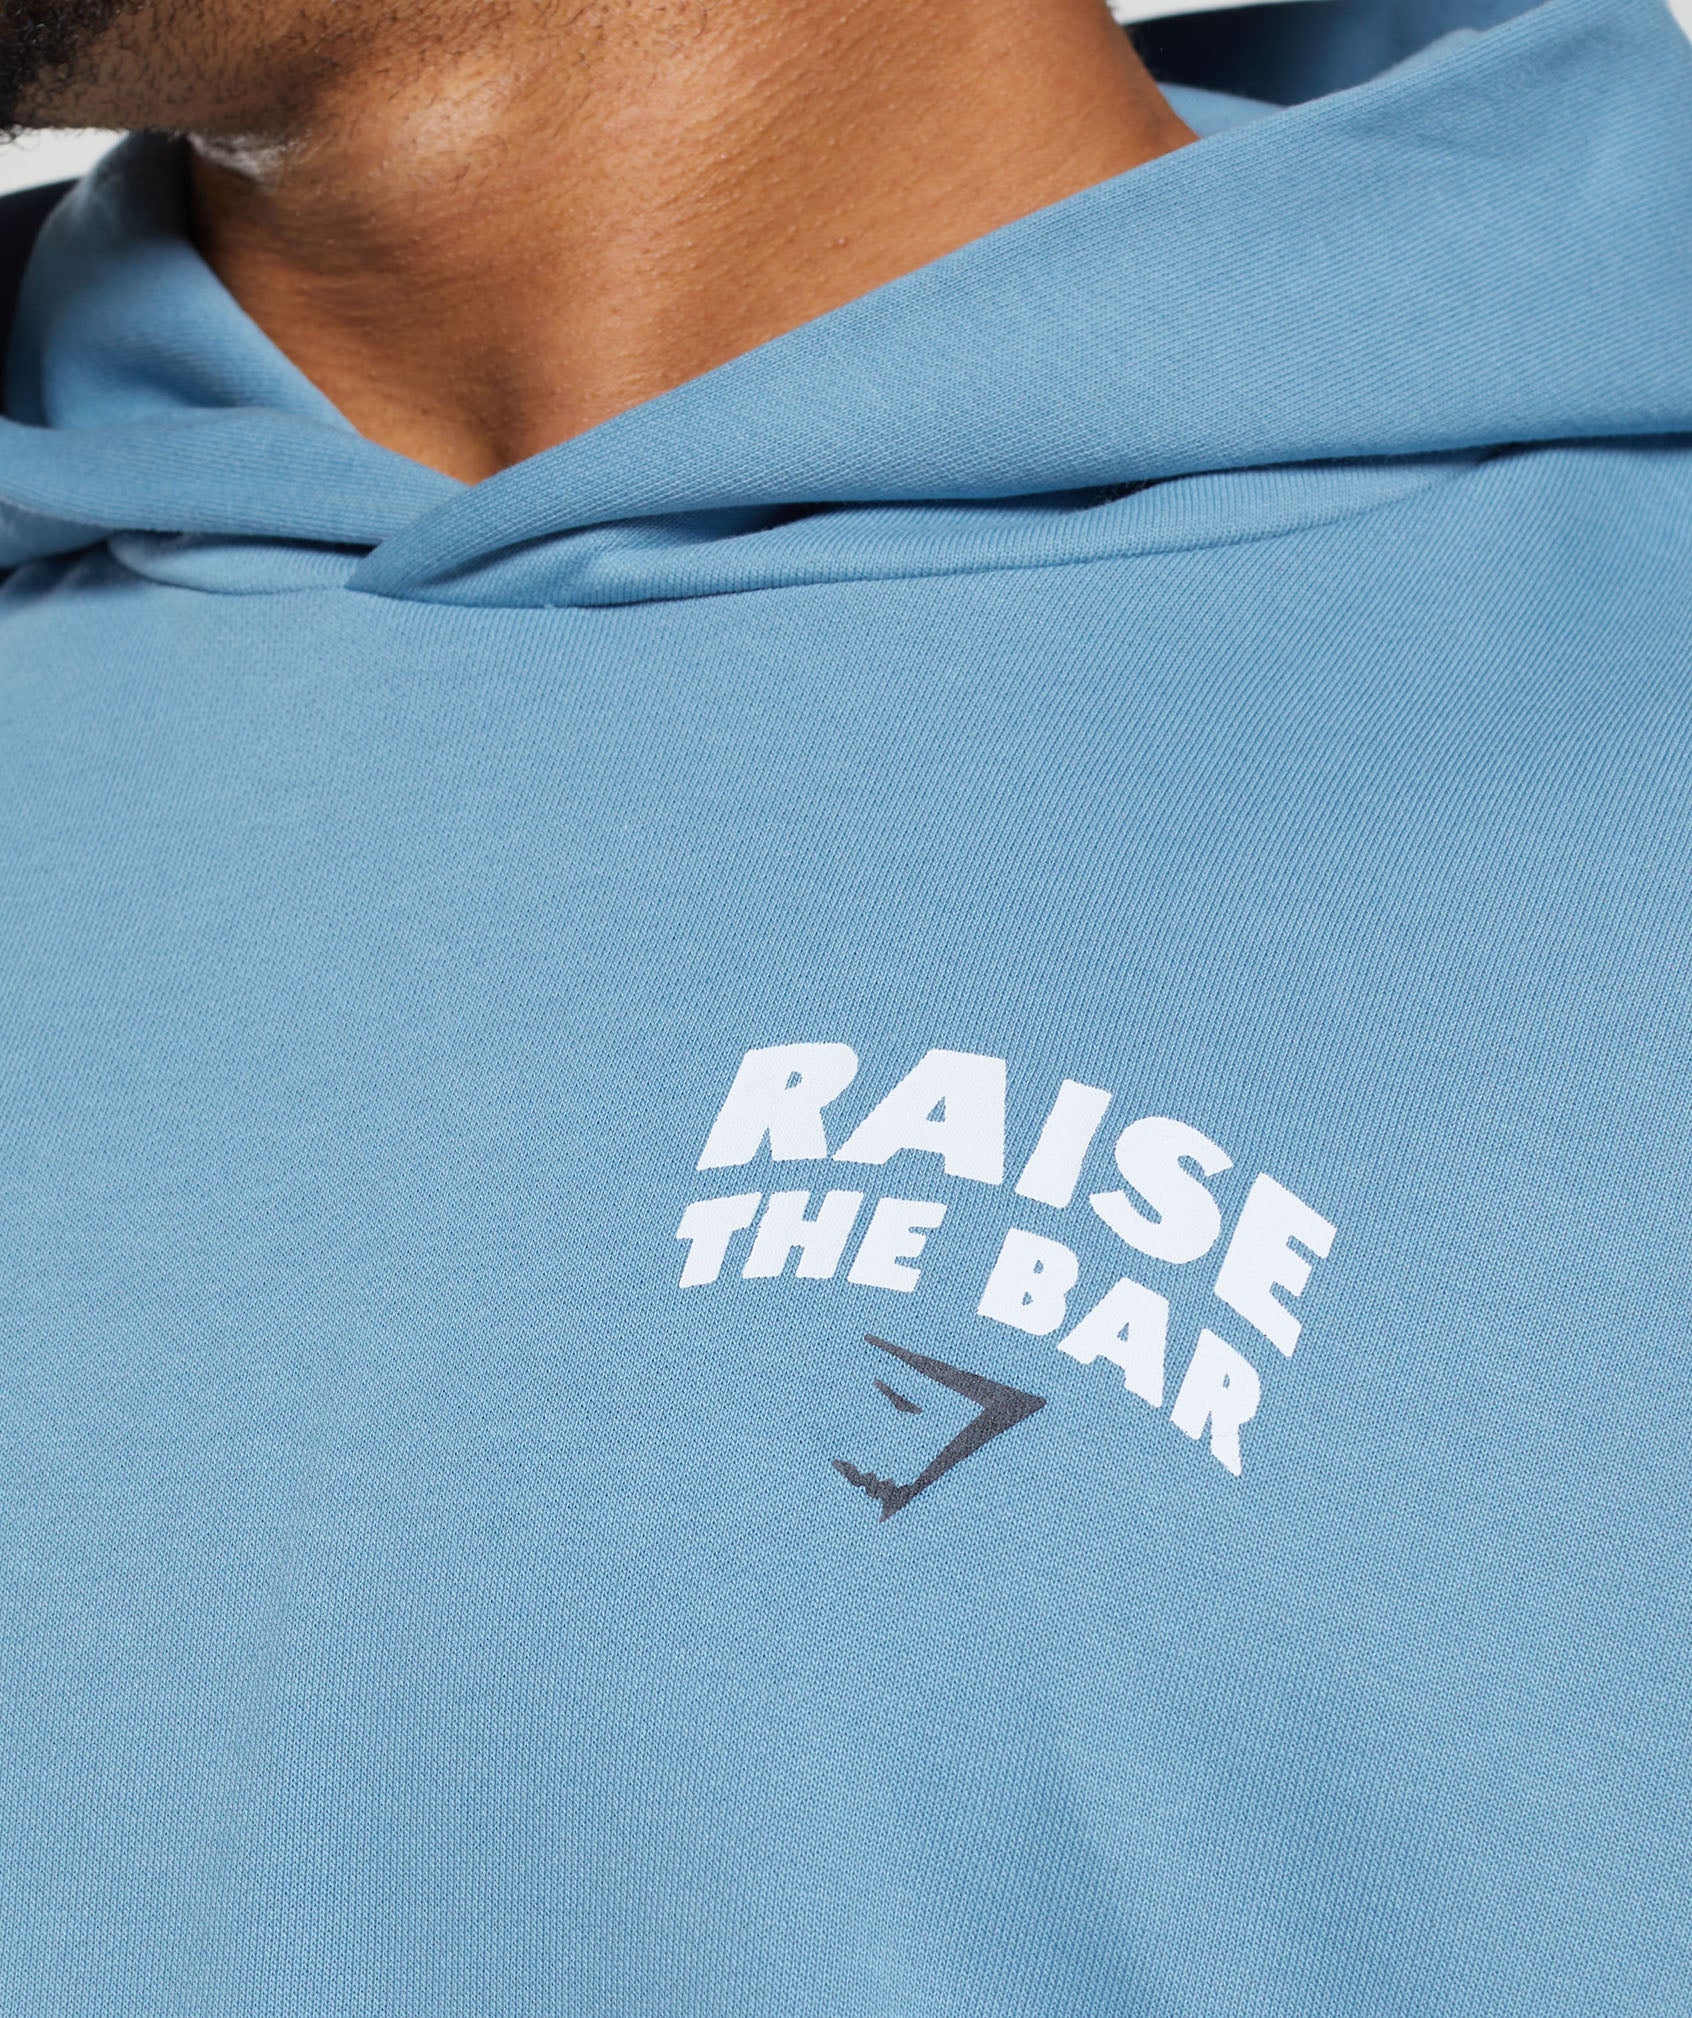 Raise the Bar Hoodie in Dusk Blue - view 5